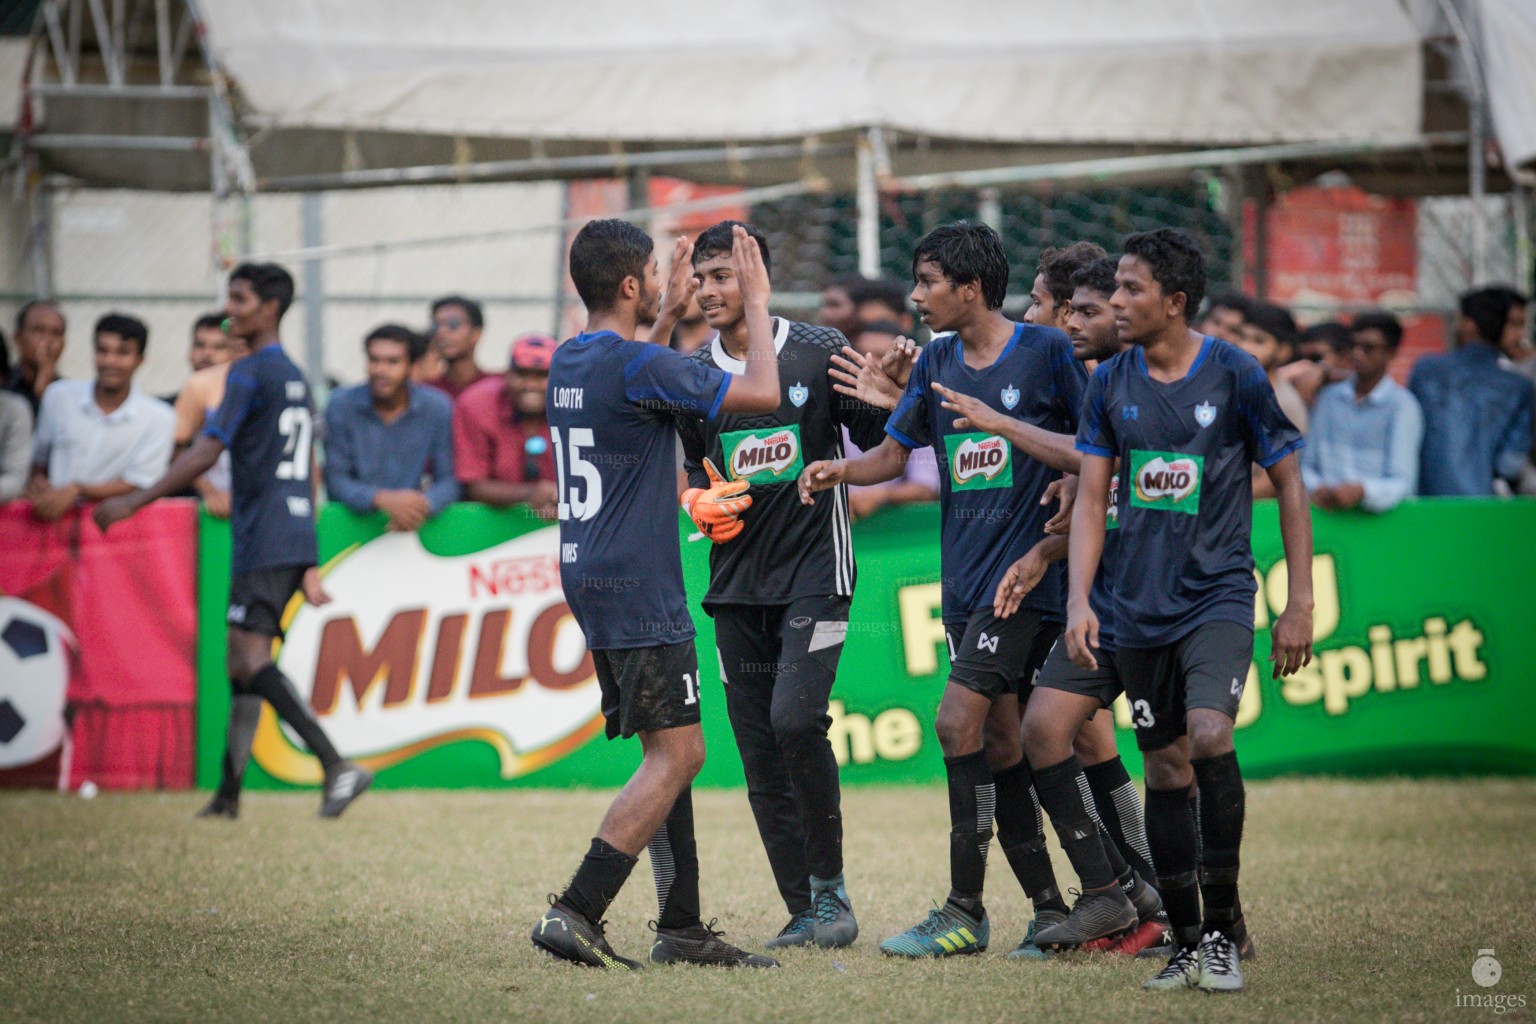 BAEC vs VIHS in the Milo Inter-school U18 Football 2018 on 23rd March 2018